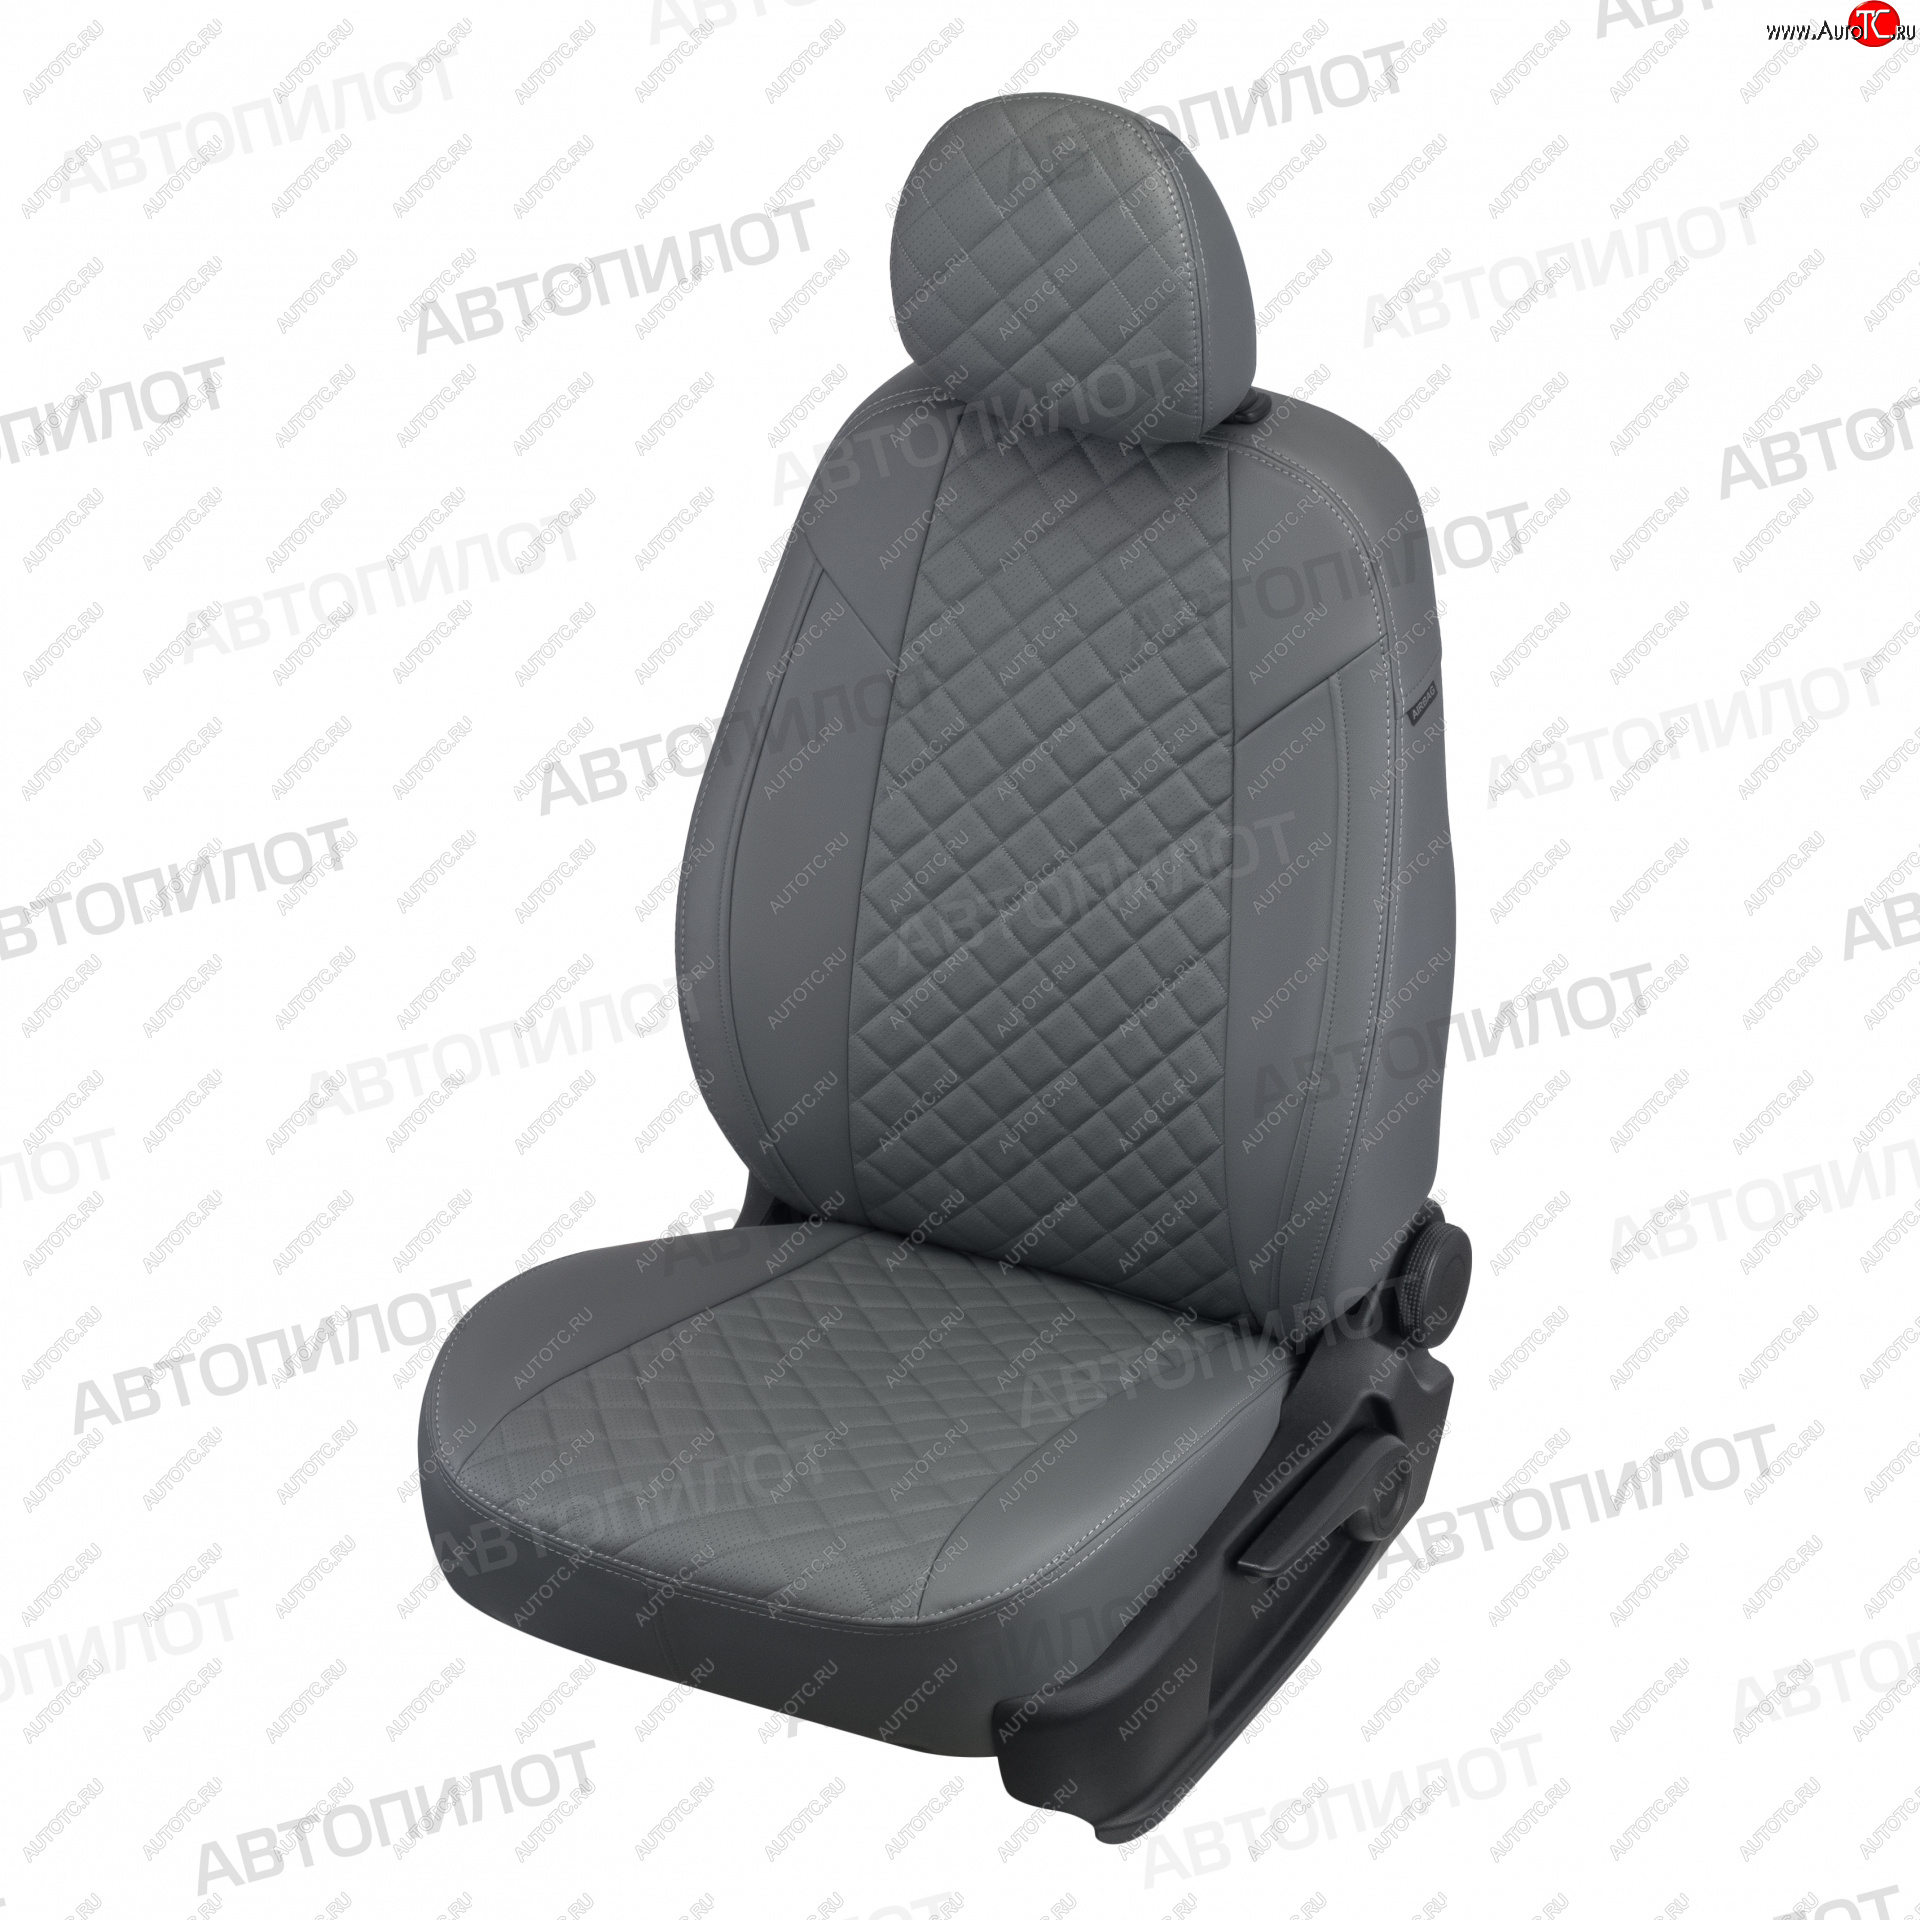 13 999 р. Чехлы сидений (экокожа) Автопилот Ромб  Hyundai Sonata  EF (2001-2013), KIA Magentis (2000-2005) (серый)